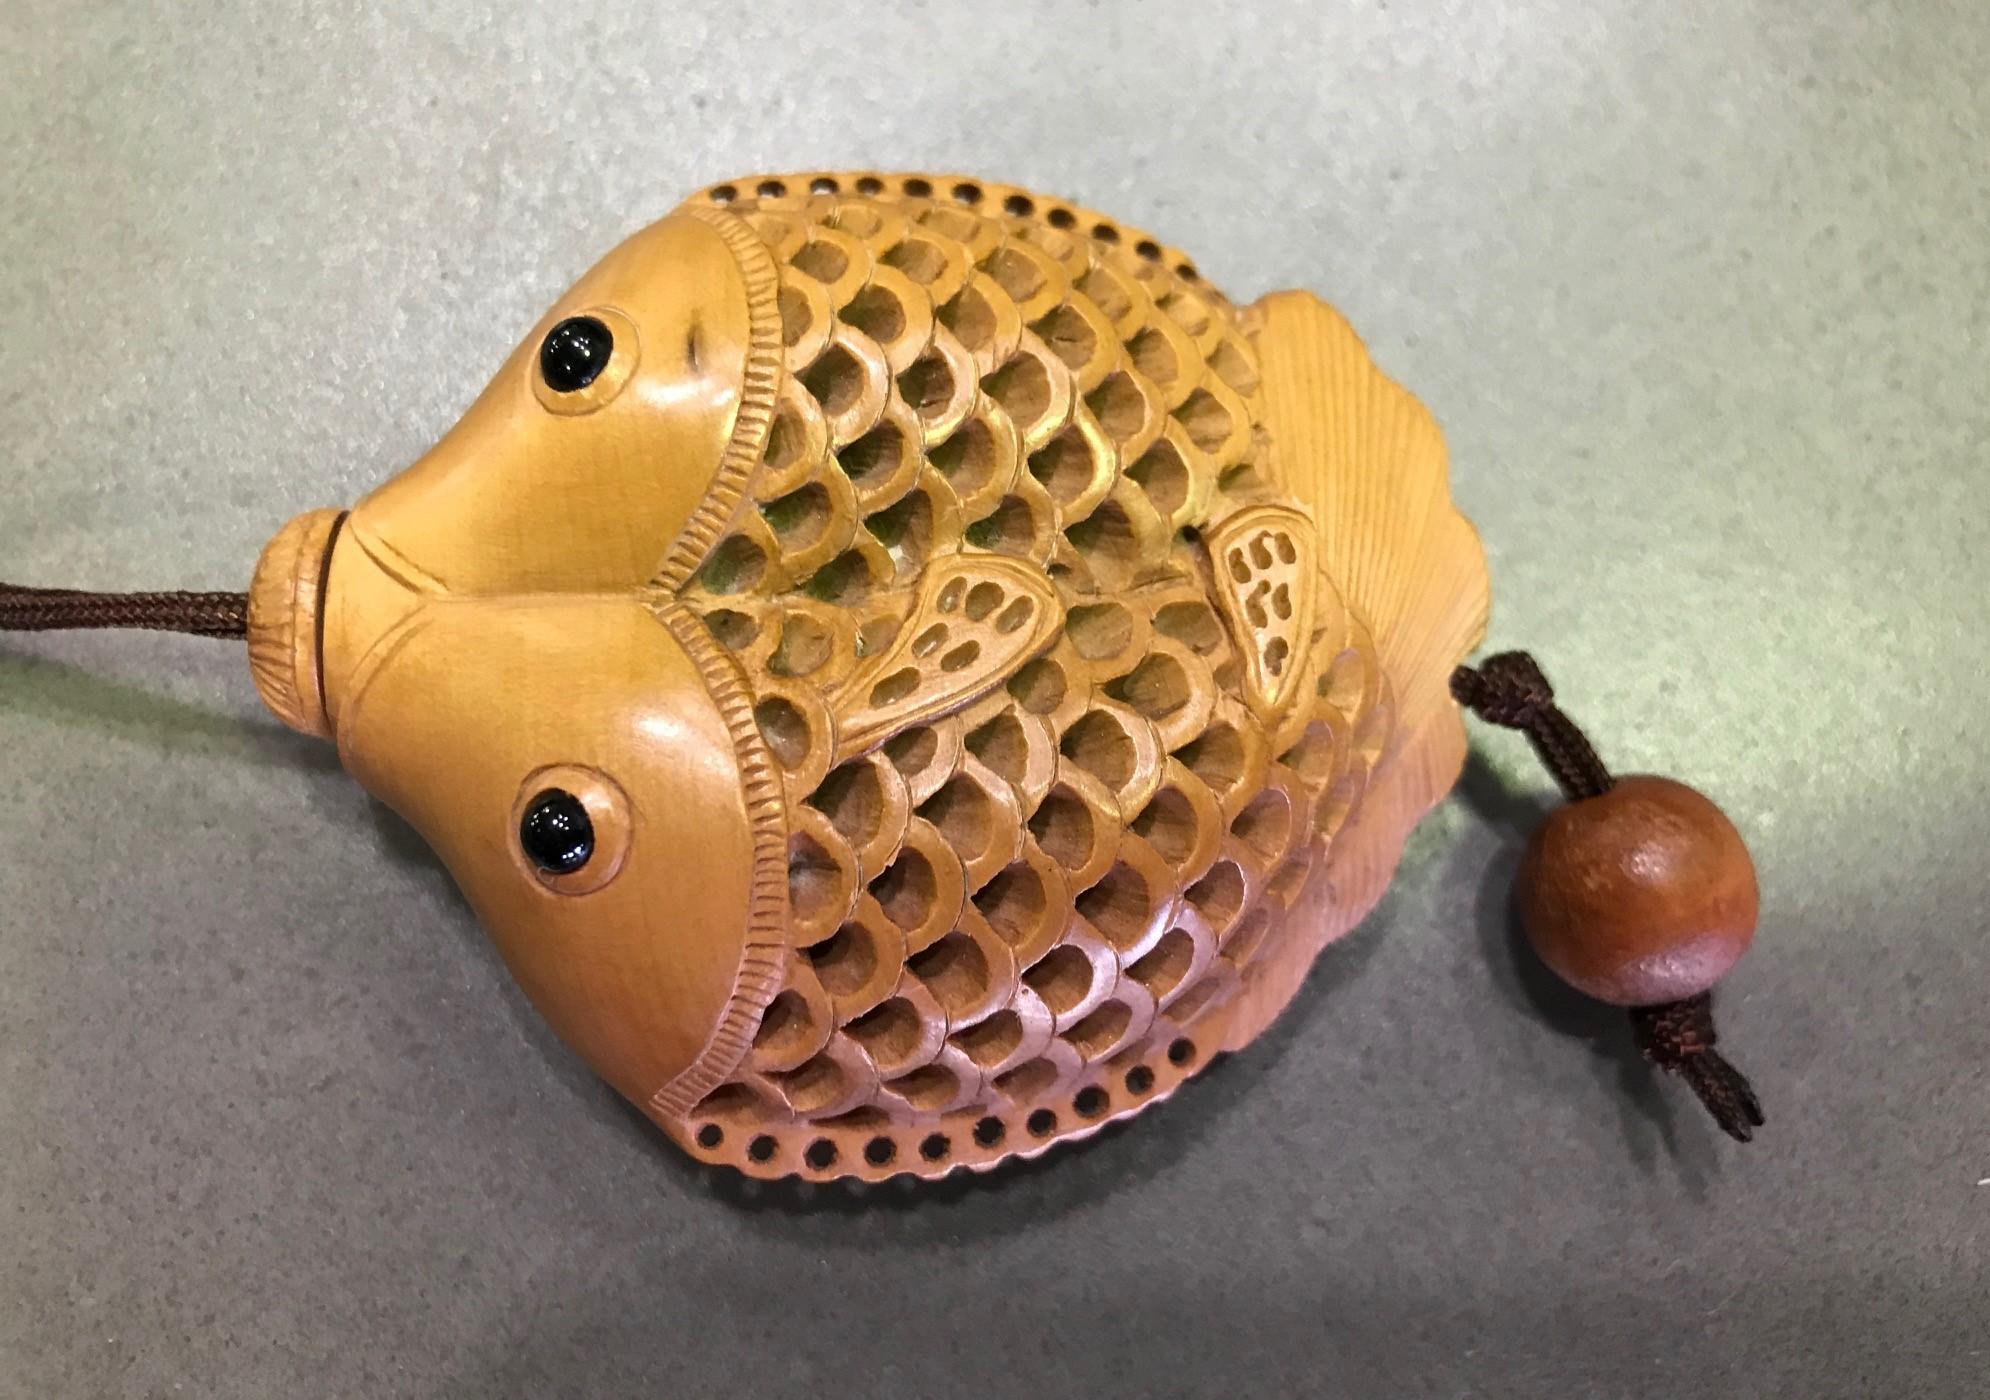 Showa Japanese Wood Carving Koi Double Fish Netsuke or Medicine Box with Black Eyes